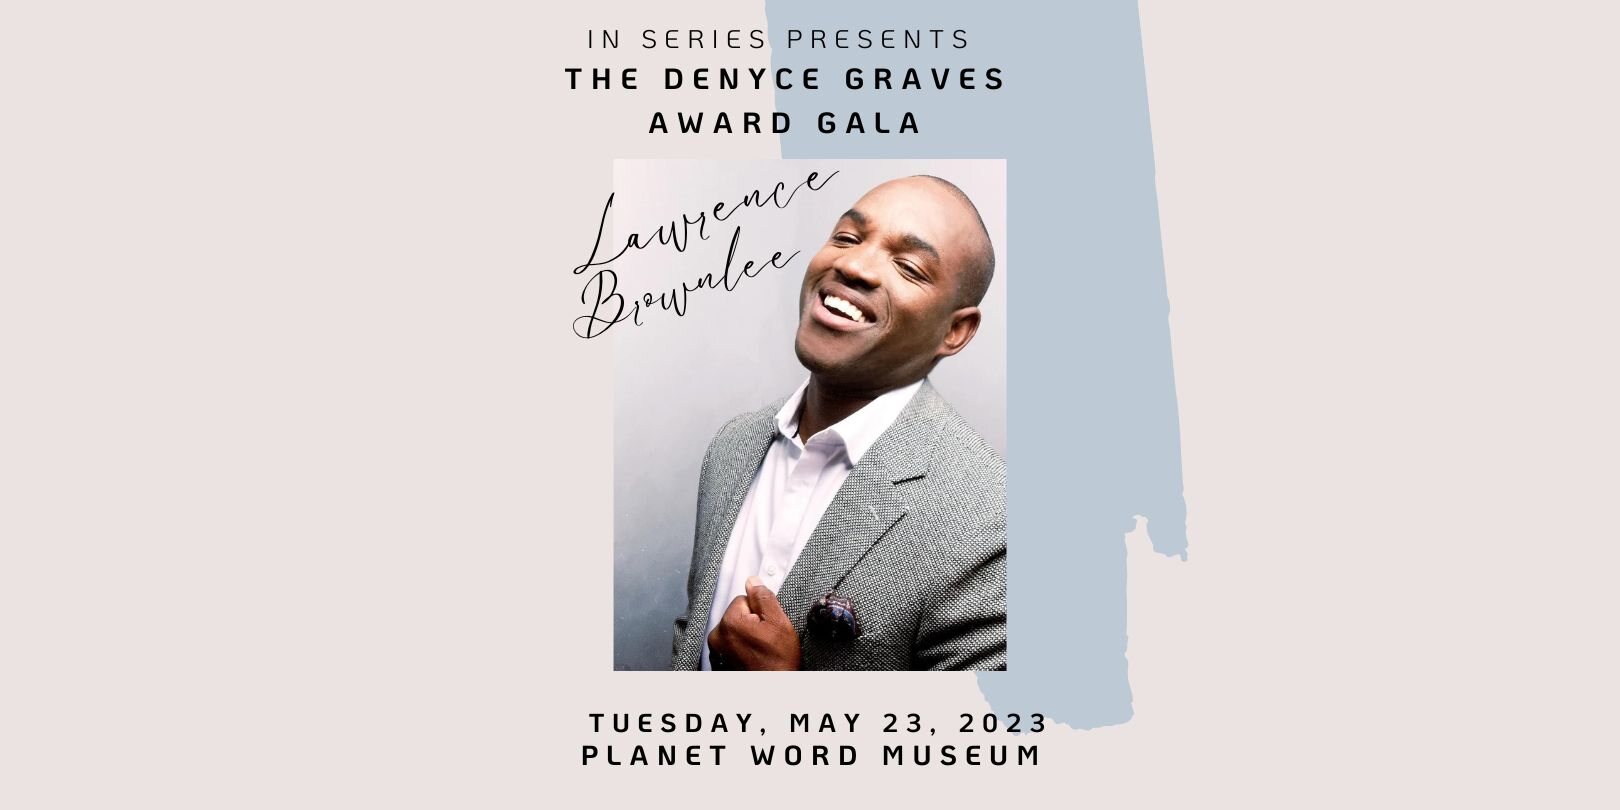 The Denyce Graves Award Gala